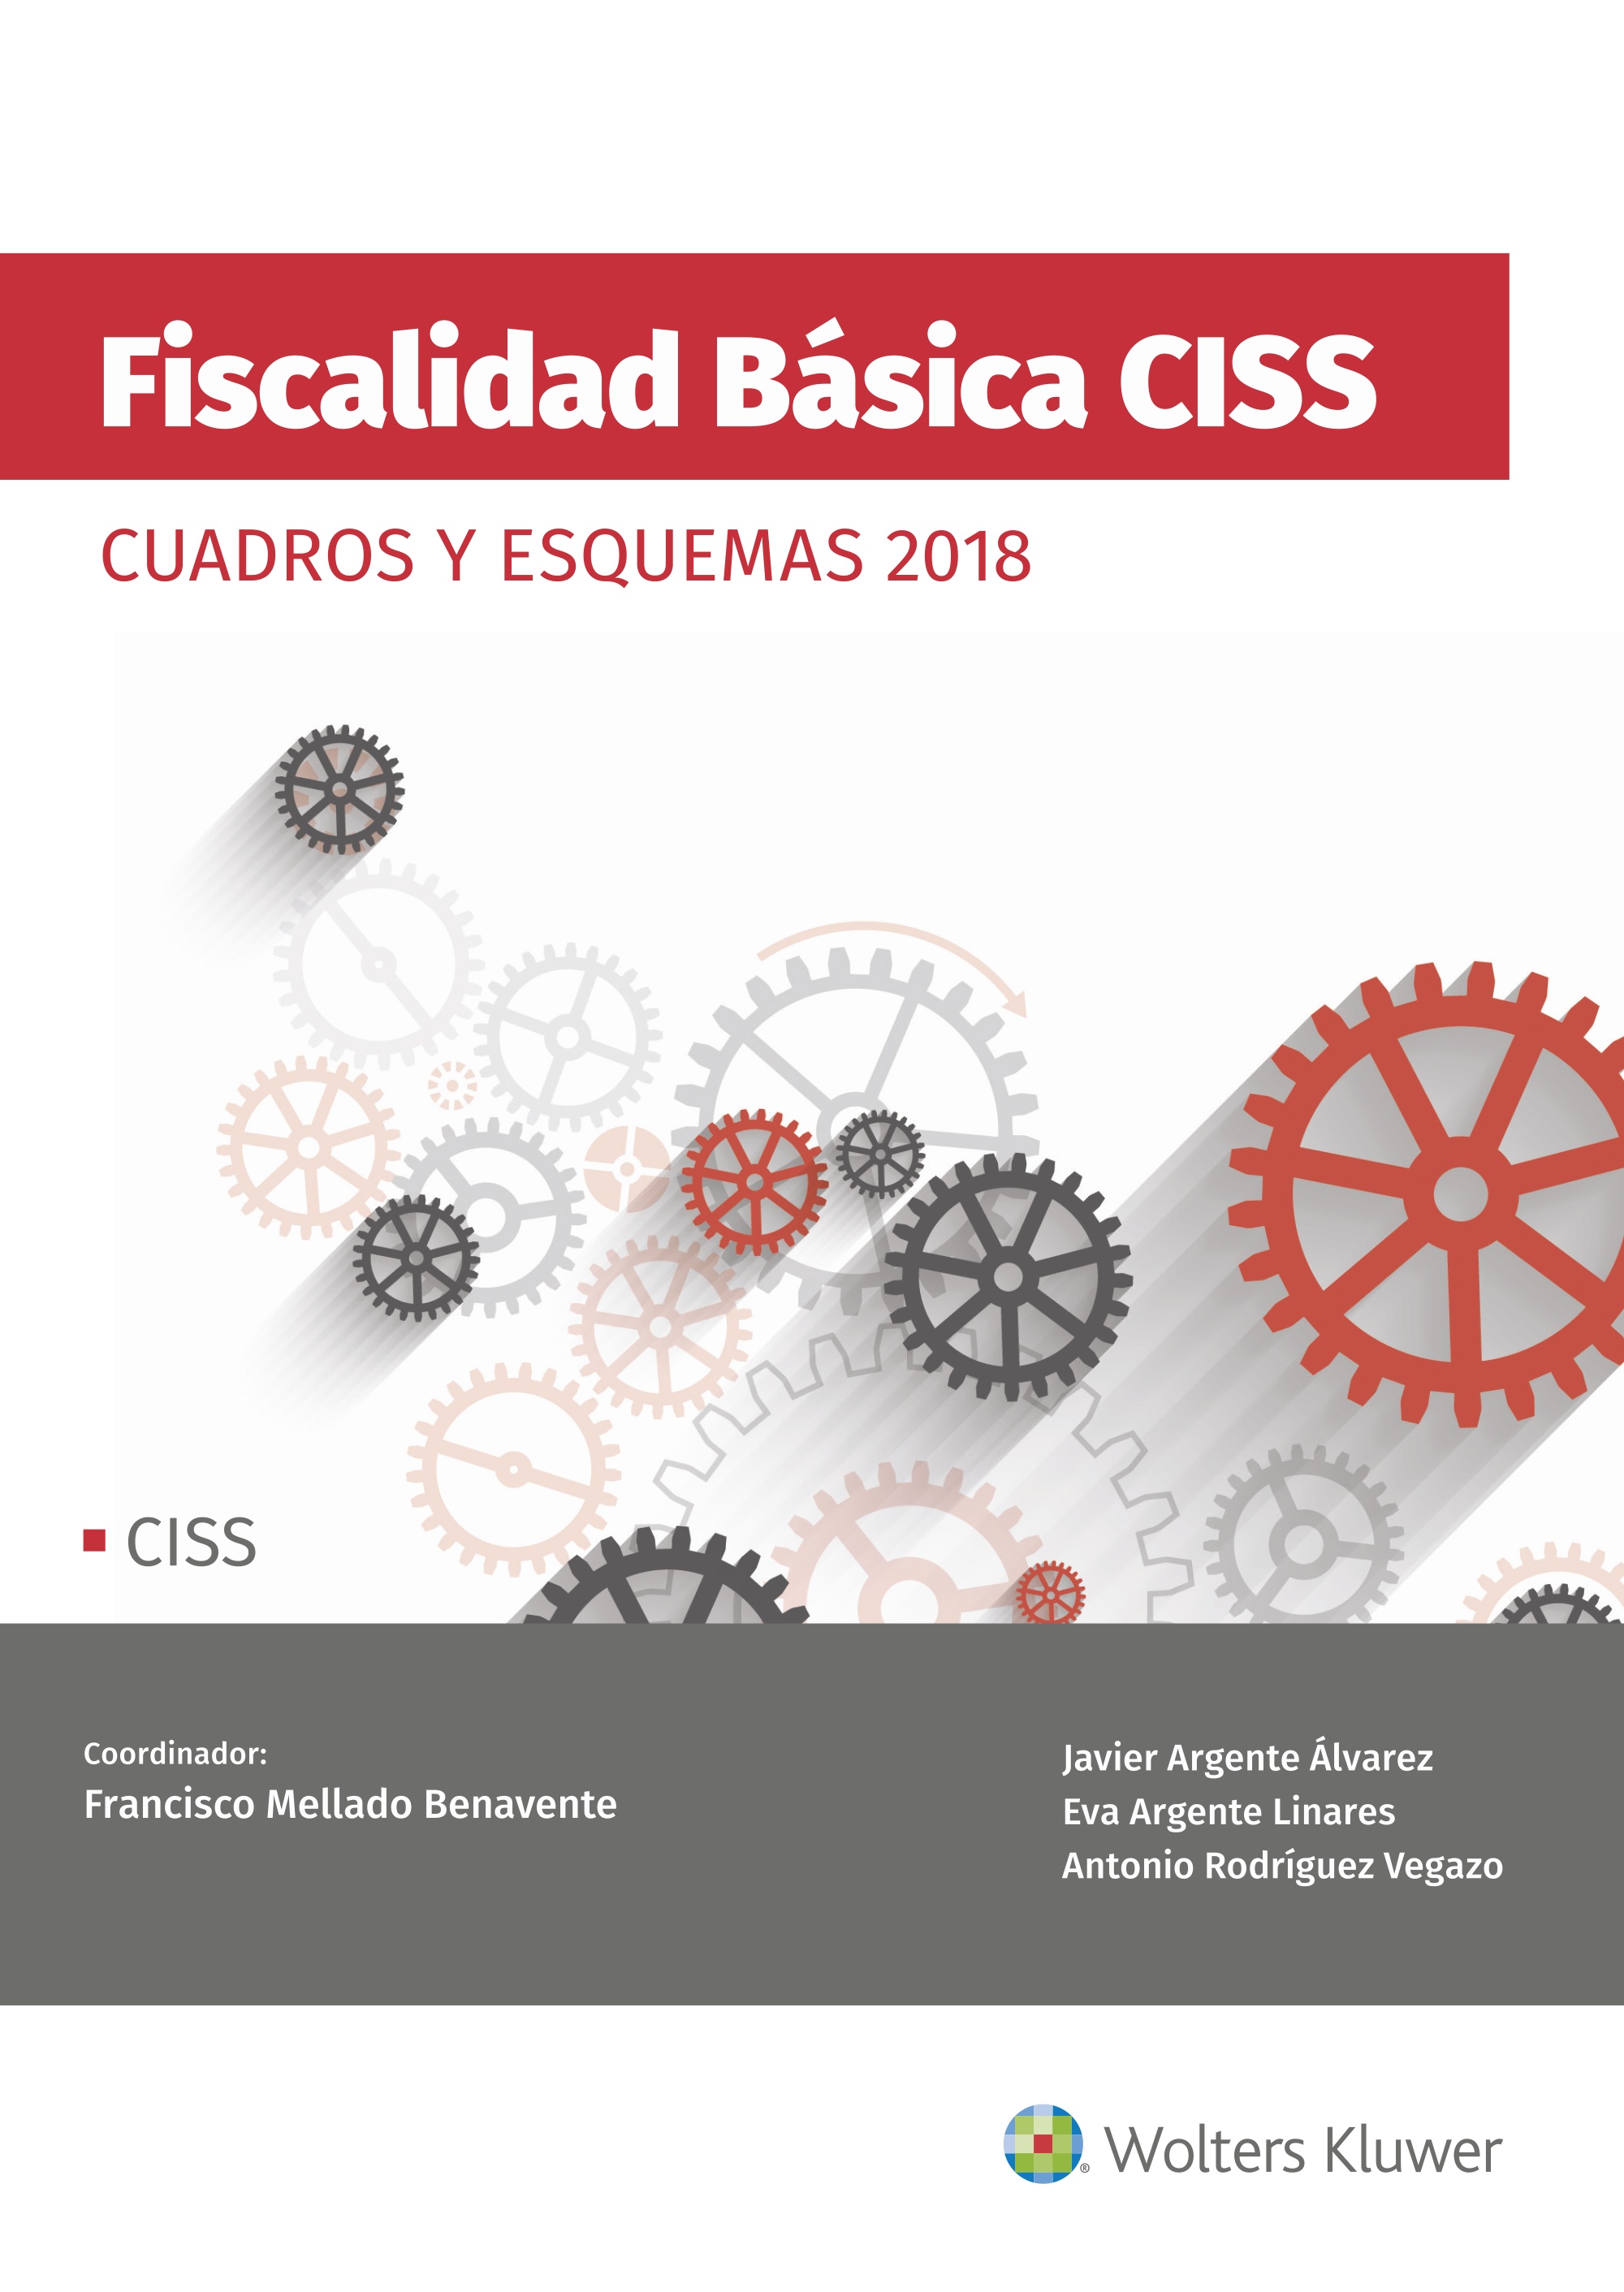 FISCALIDAD BASICA CISS